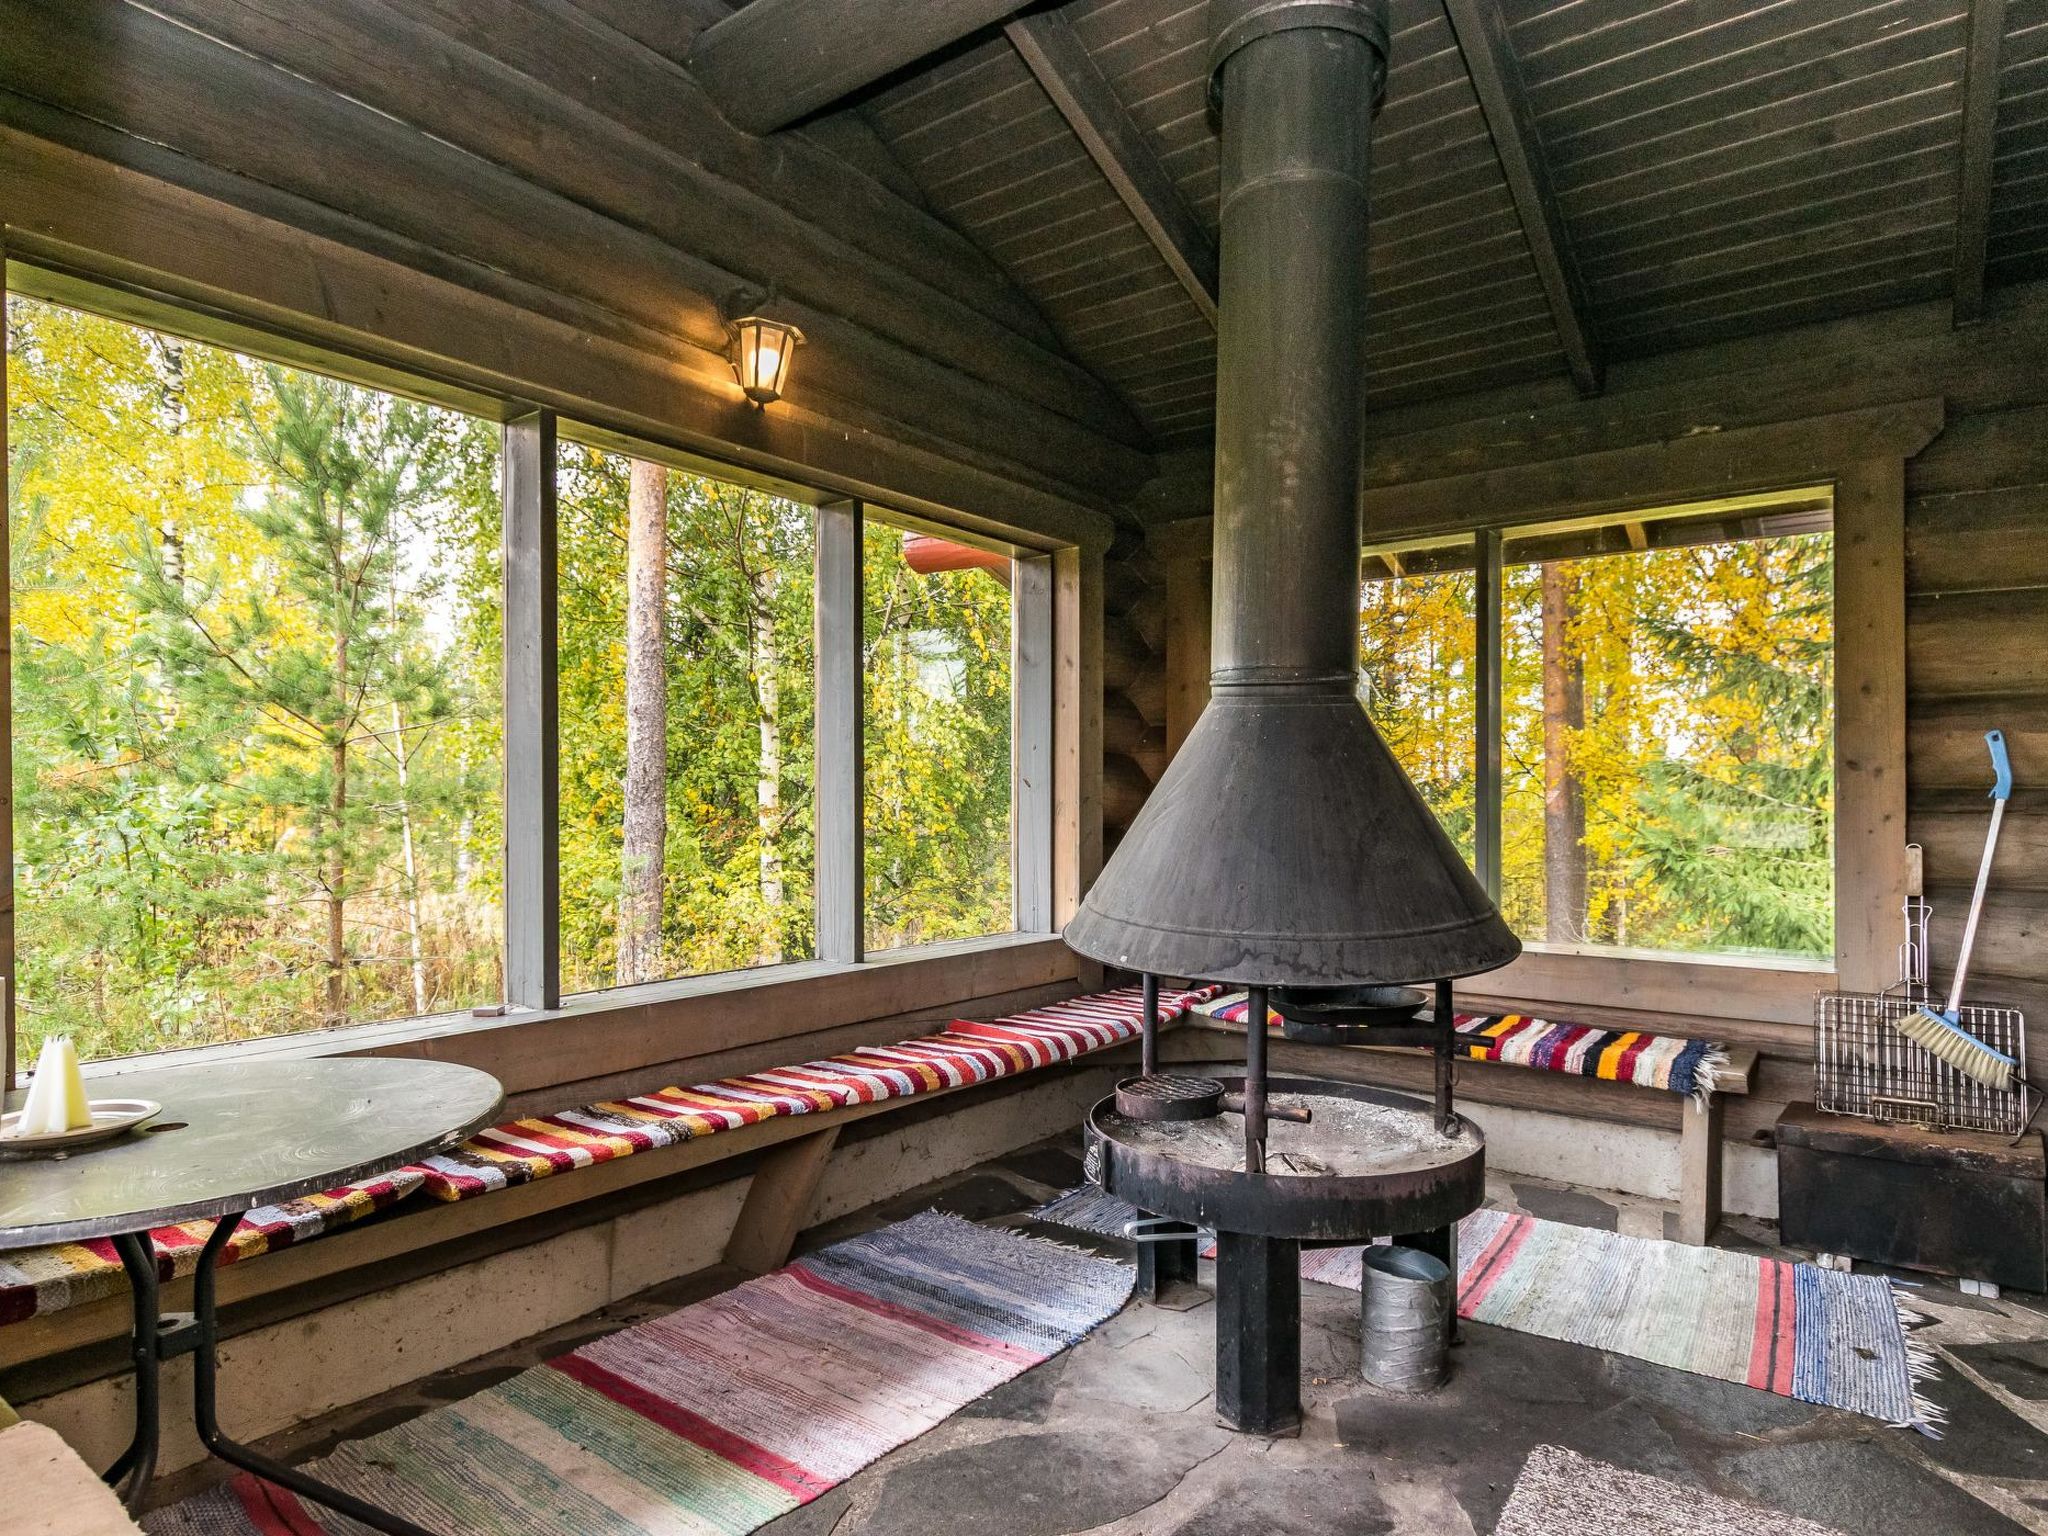 Photo 5 - 6 bedroom House in Mikkeli with sauna